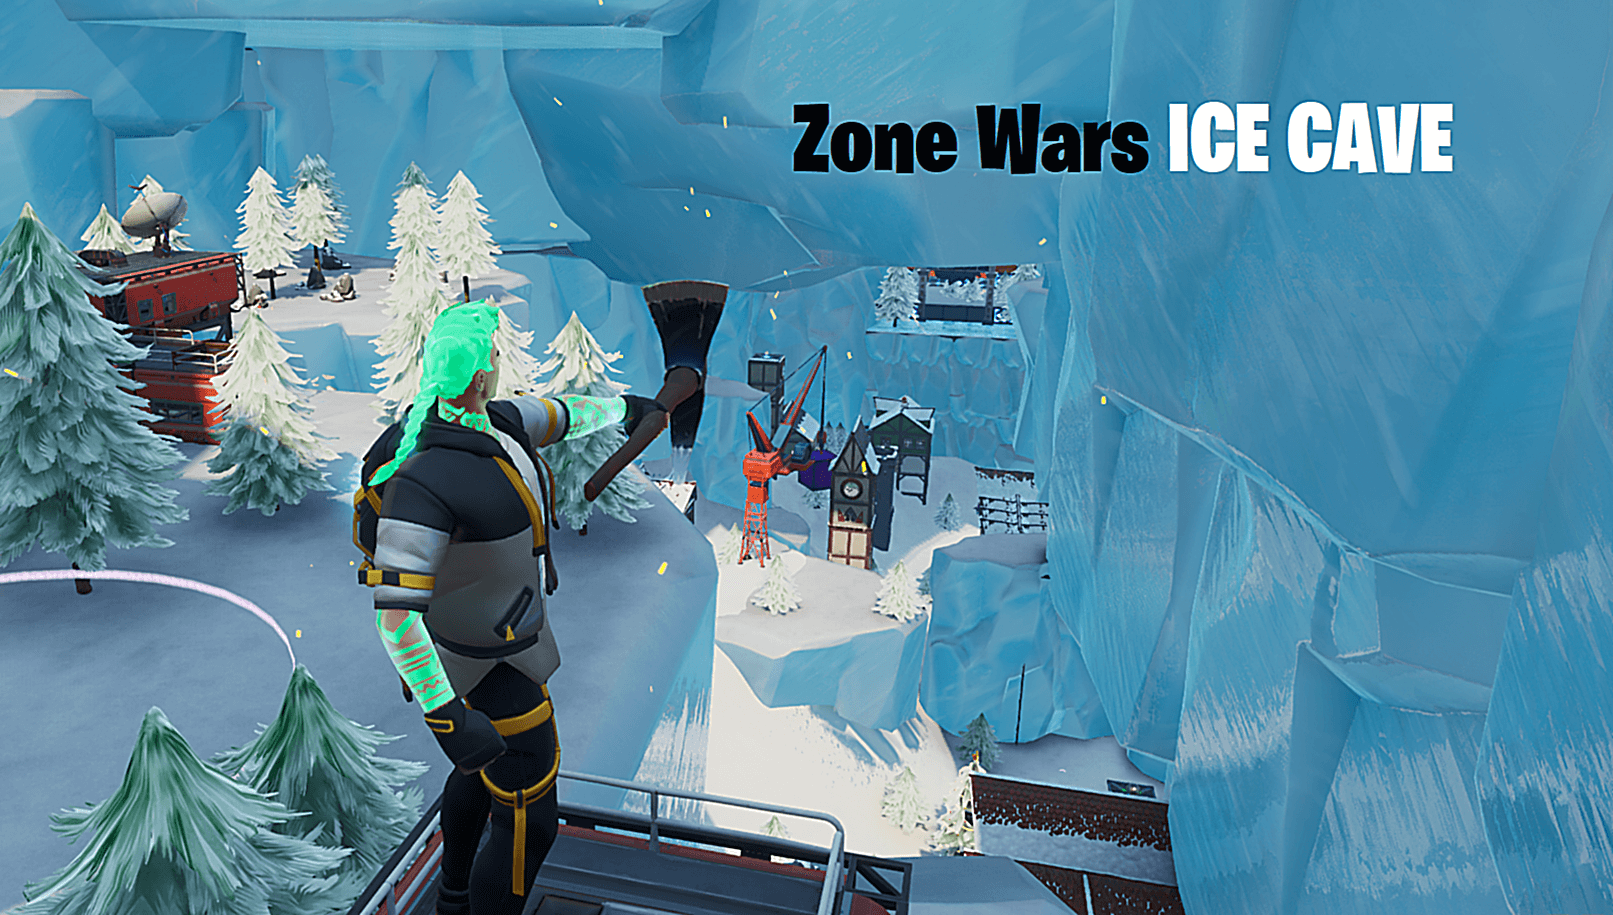 ZONE WARS ICE CAVE